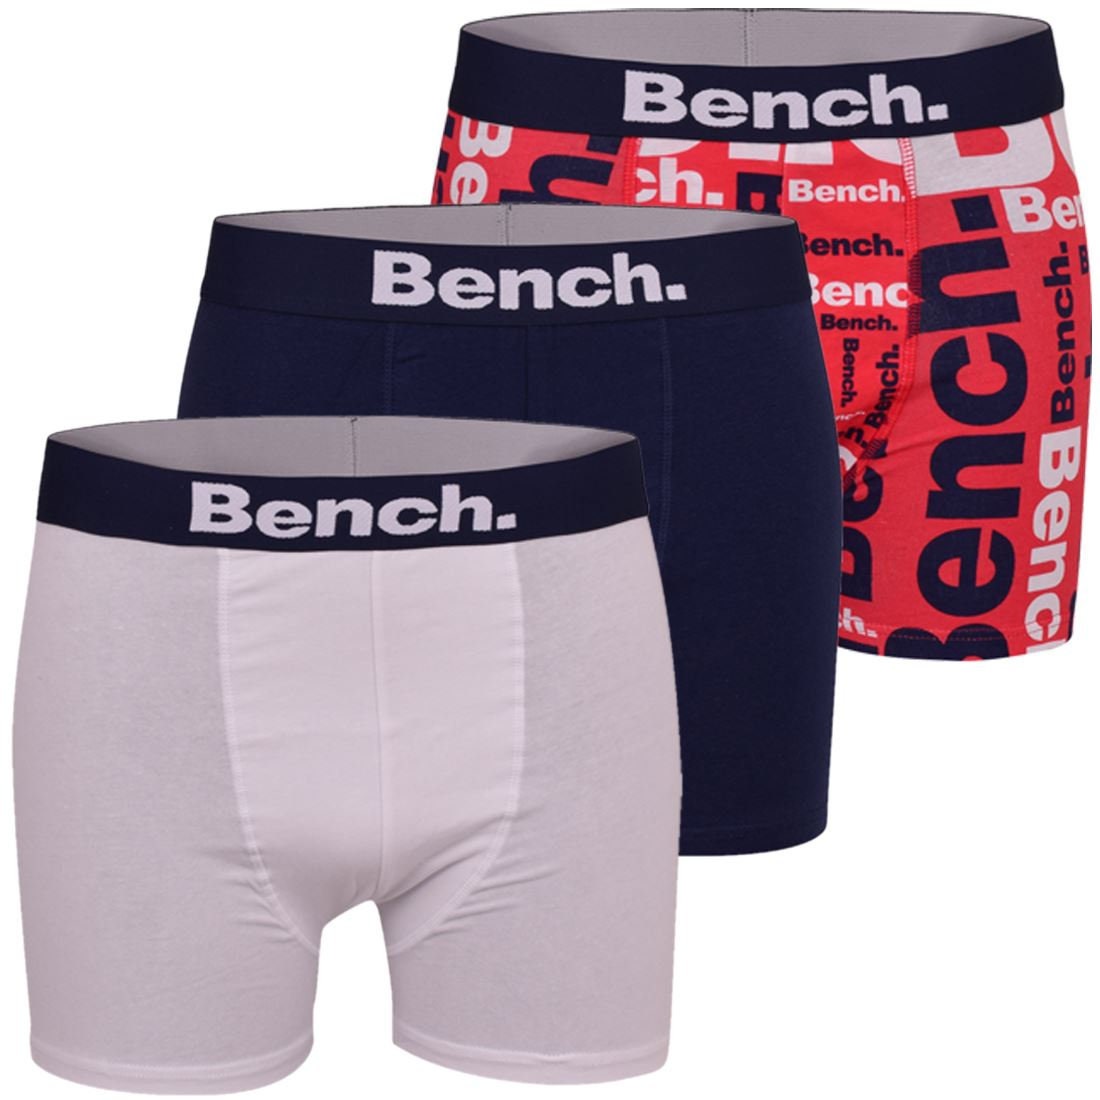 Buy GO SMART Underwear for Men (Pack of 3)